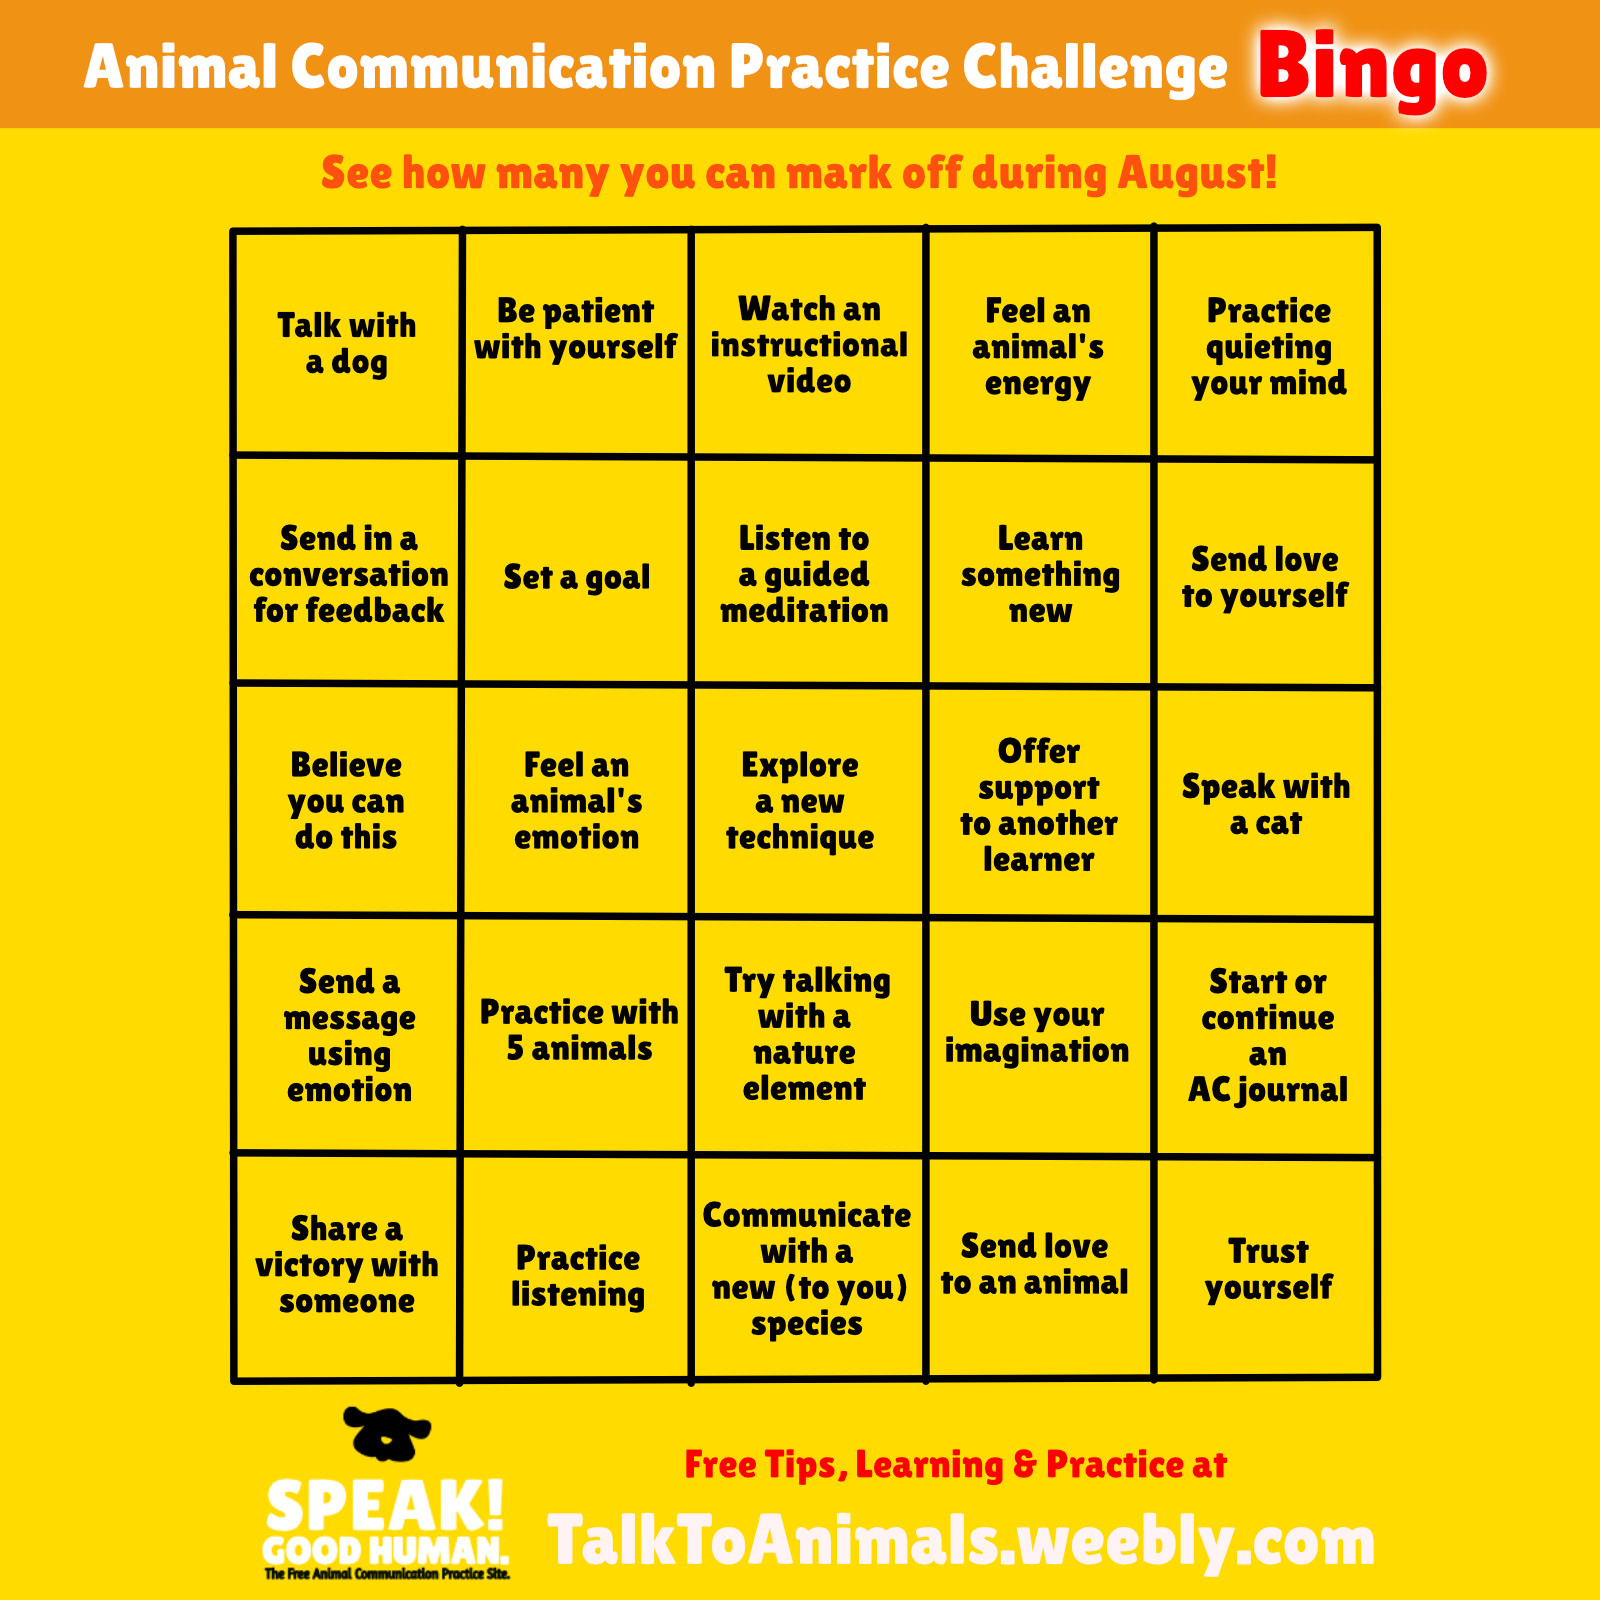 Animal Communication Practice Challenge - SPEAK! GOOD HUMAN.